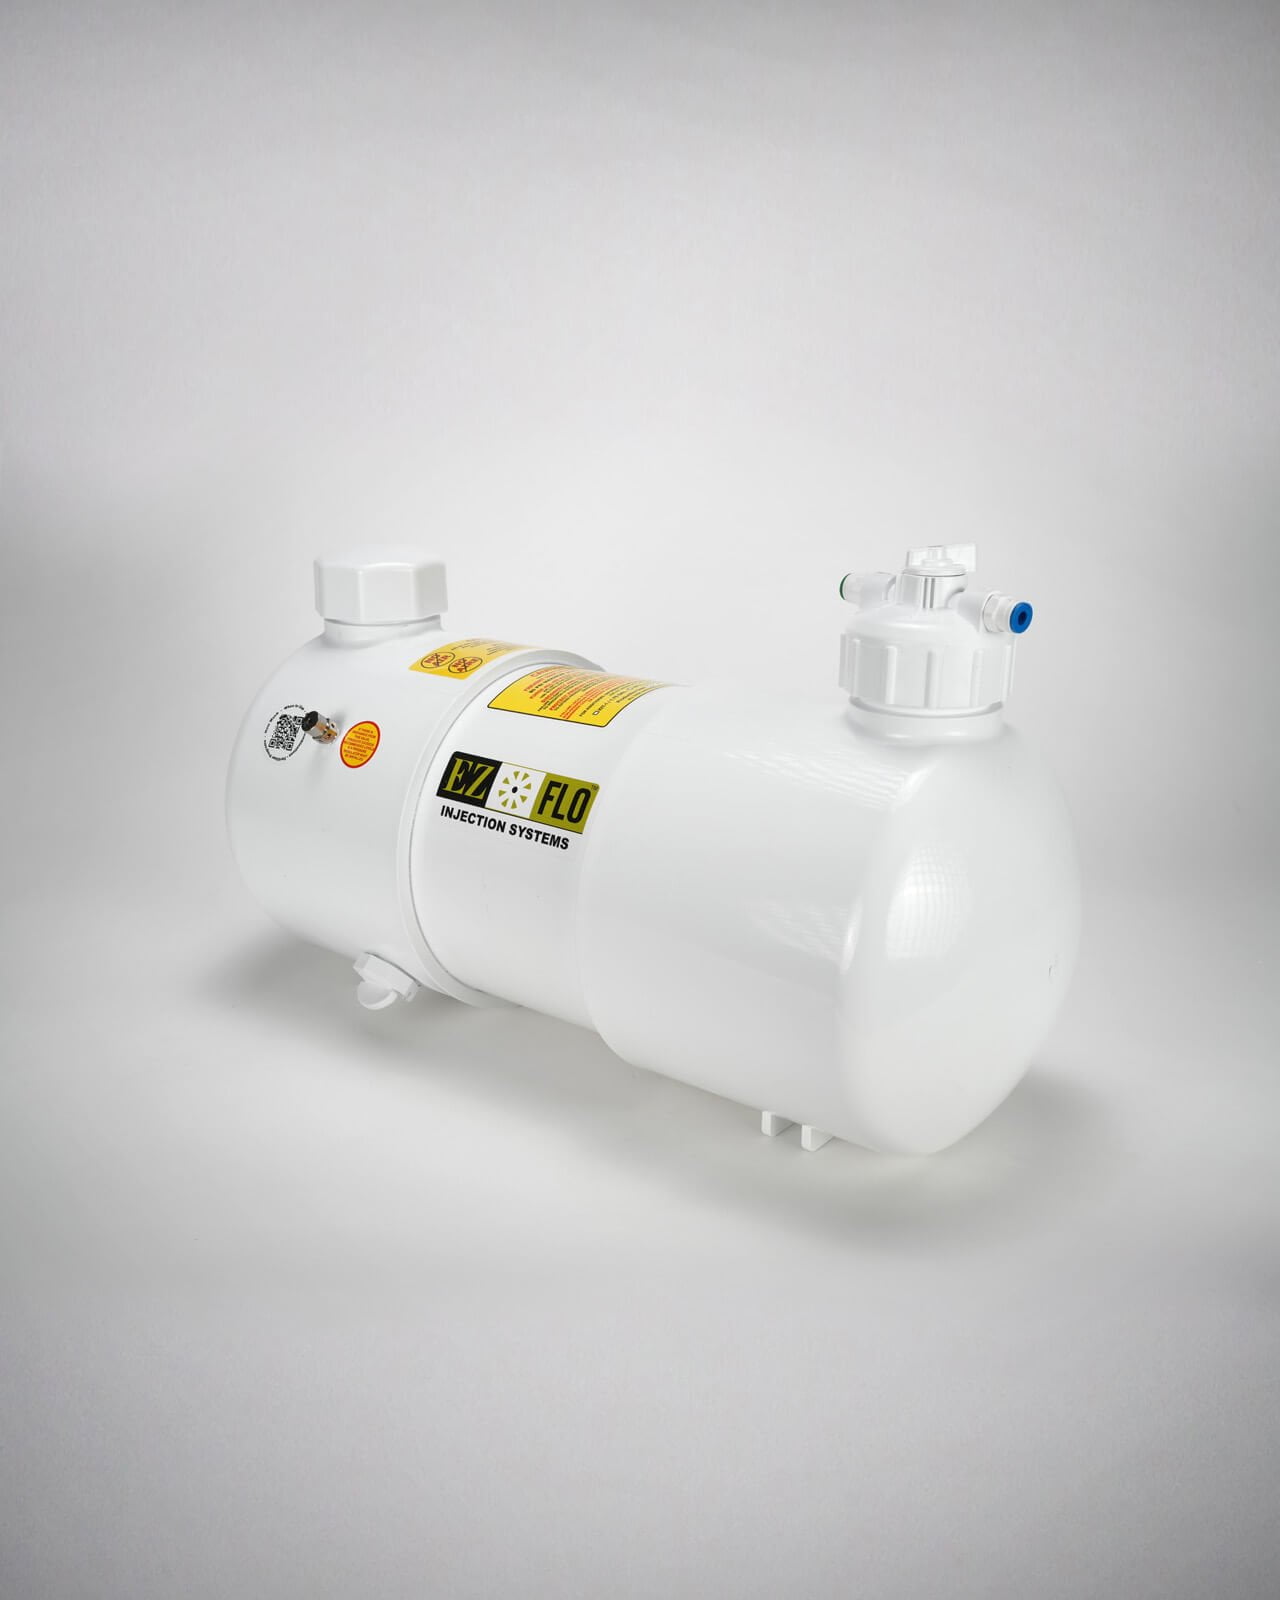 Manual Oil Pump – Ezee Flo – For 5 gal Pail – Free Flow Rate 1 qt/stroke